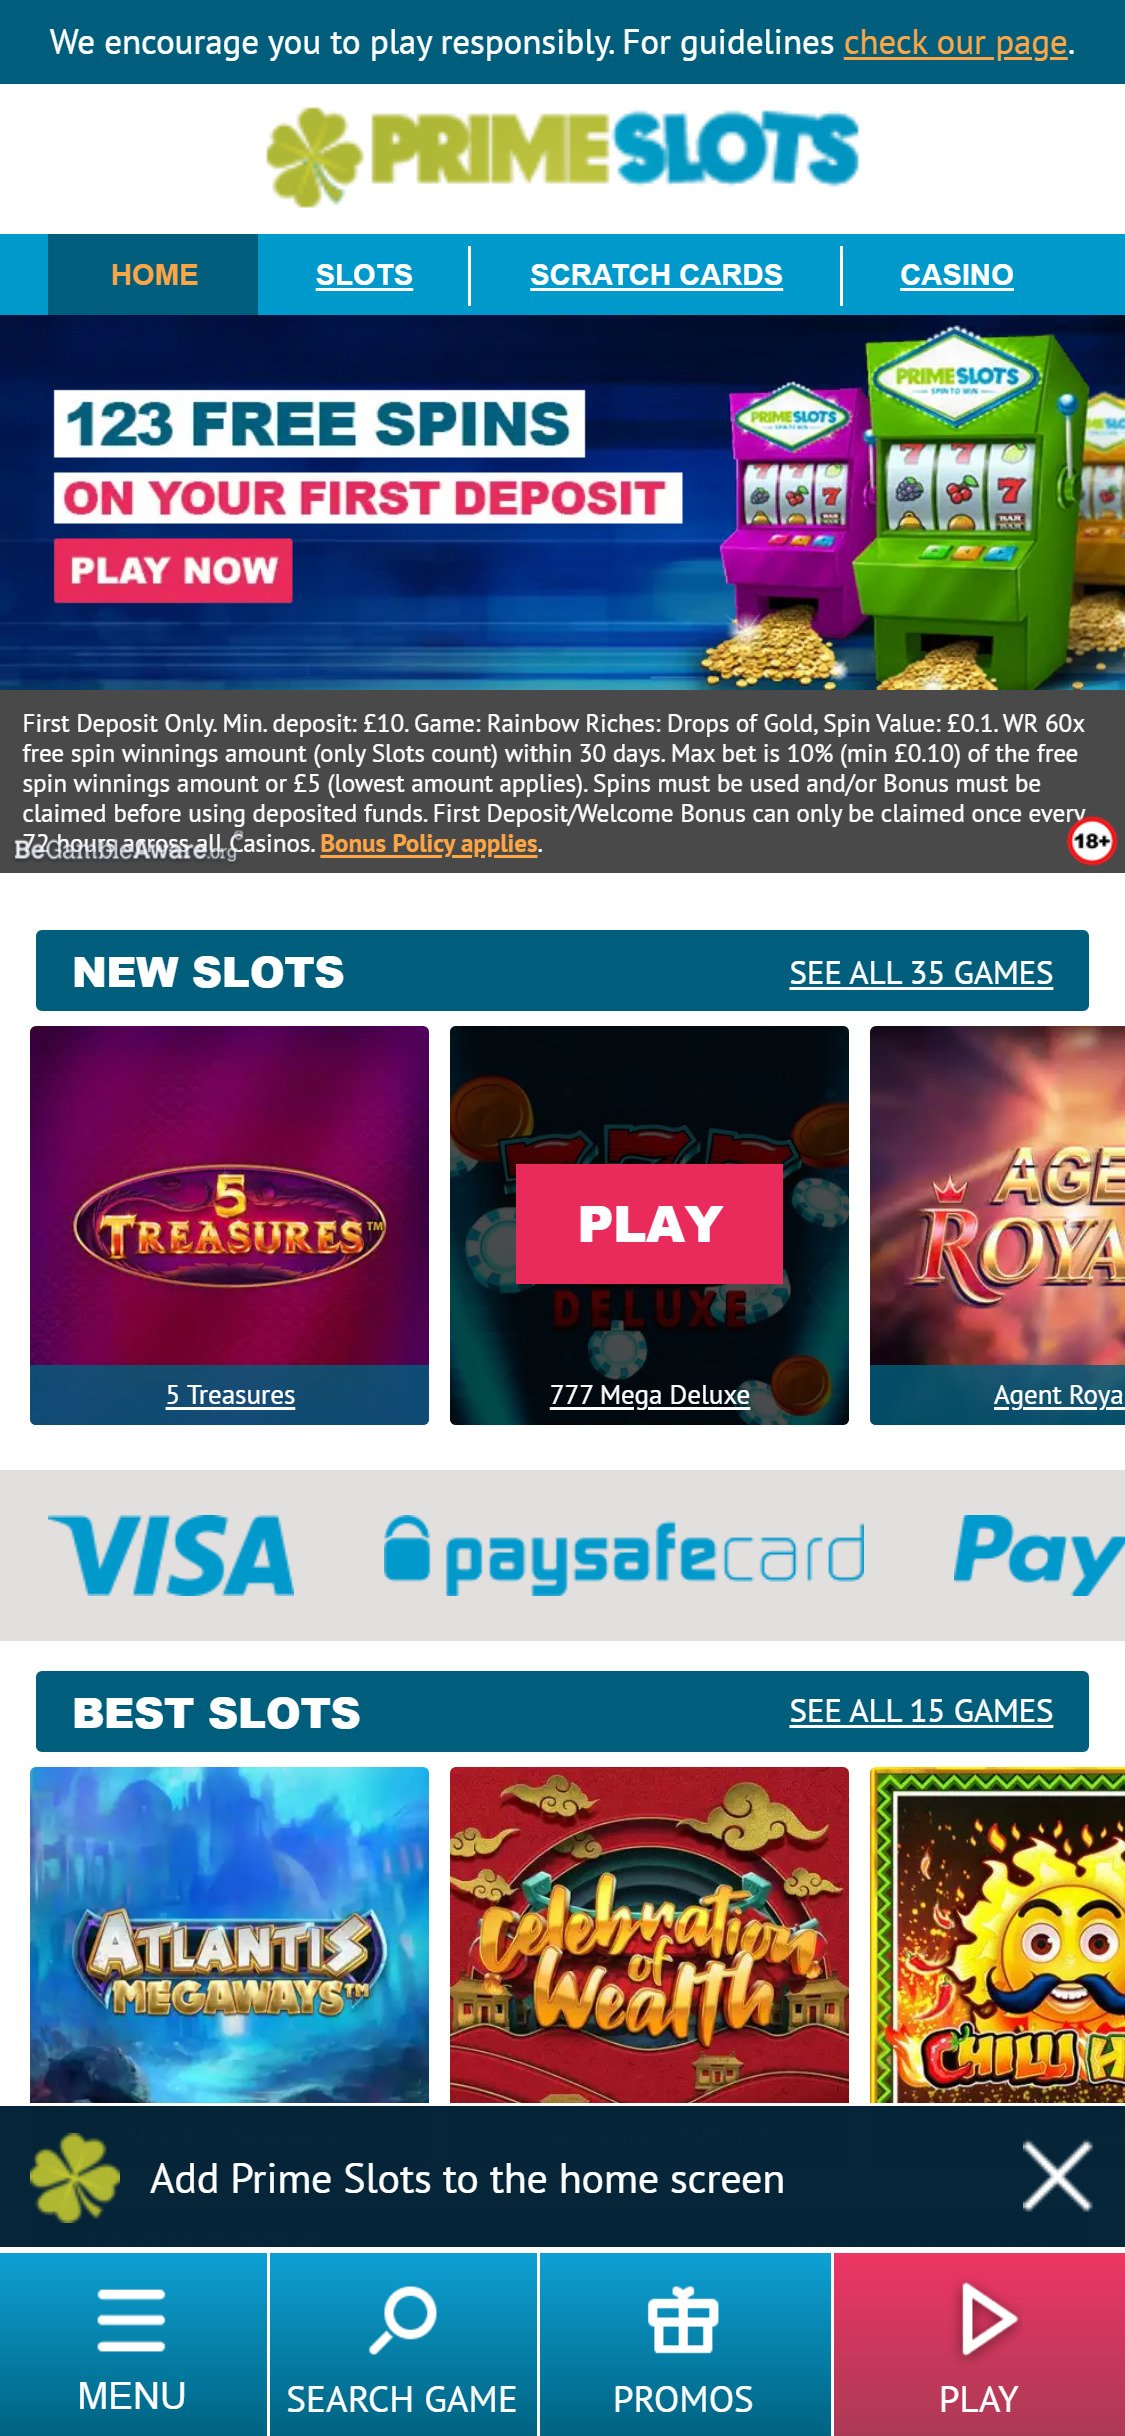 Prime Slots UK Casino Mobile Review